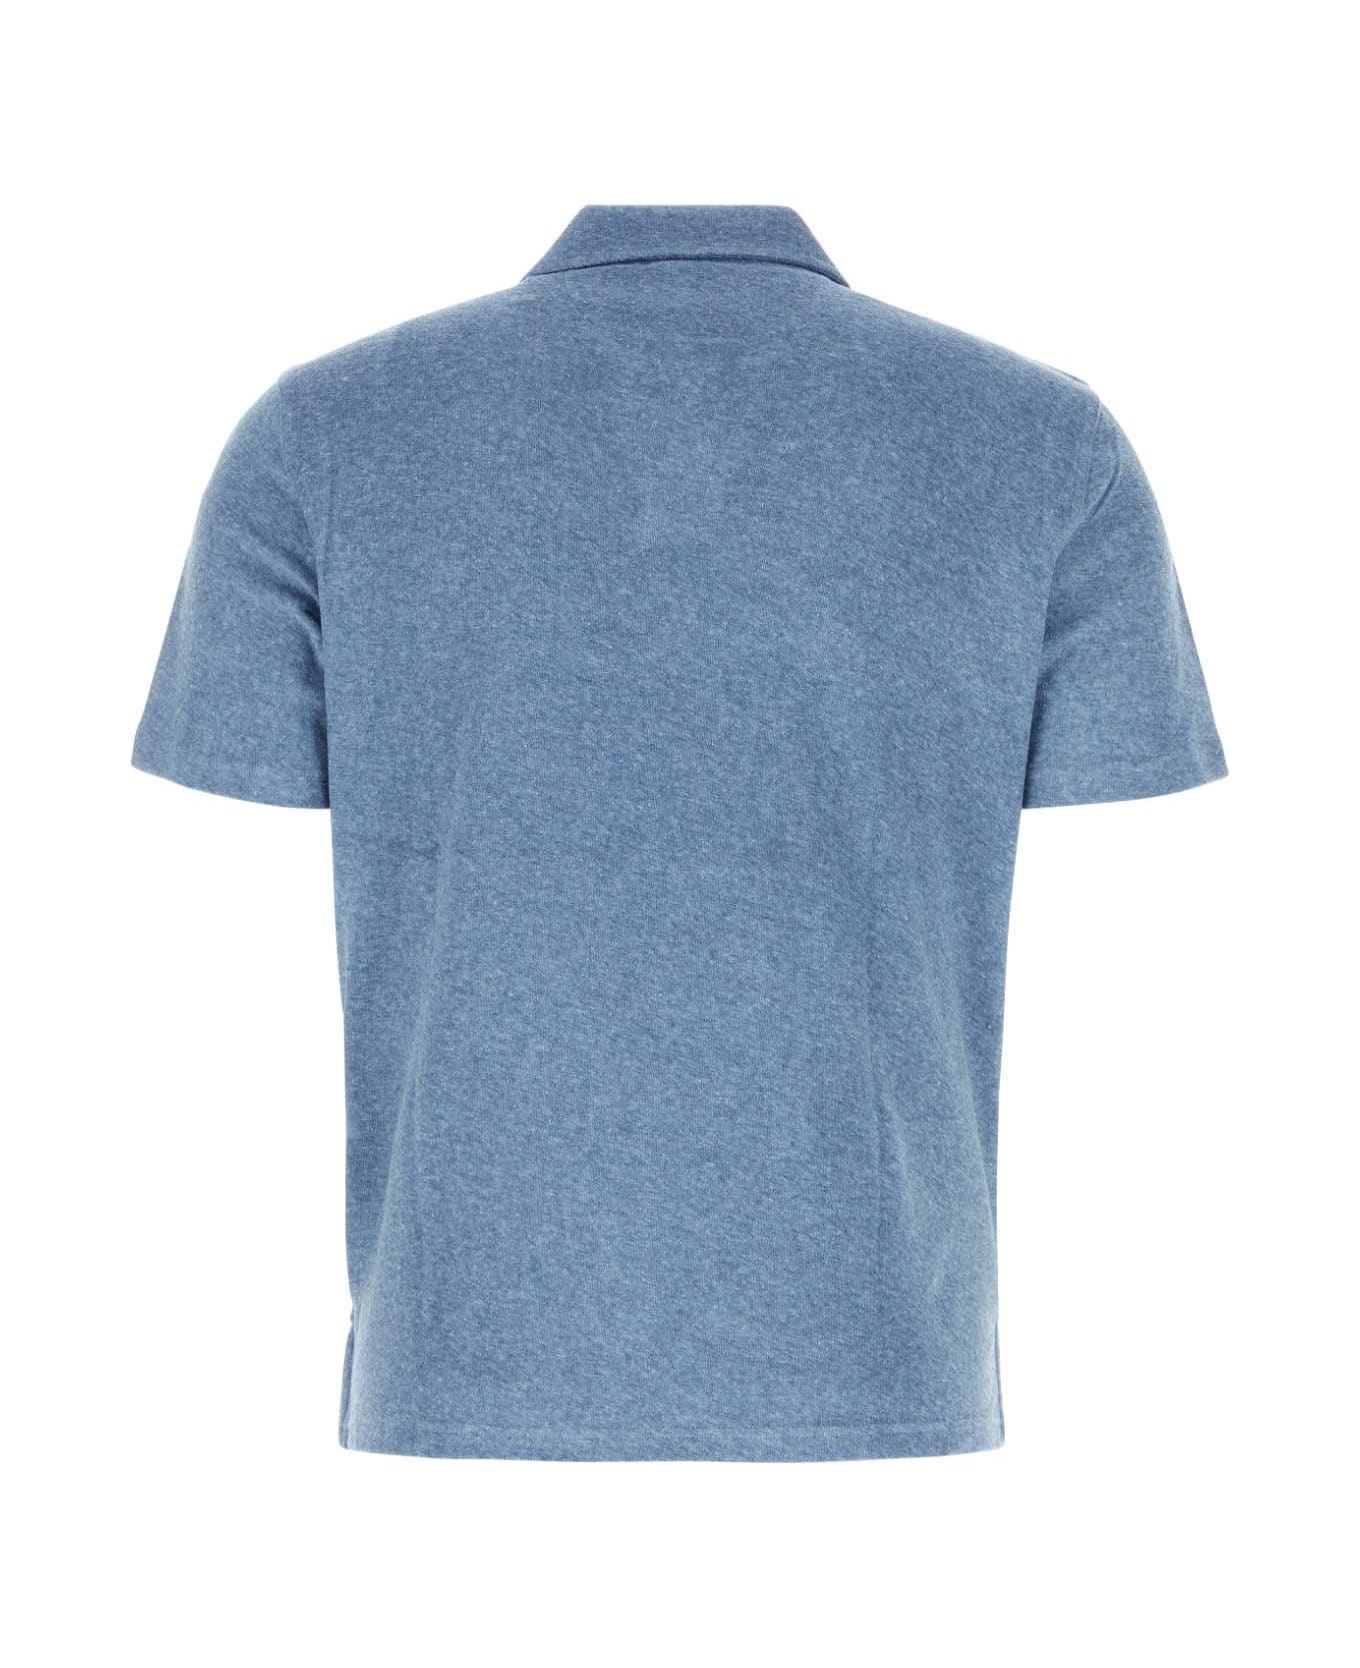 Fedeli Denim Blue Stretch Cotton Blend Polo Shirt - Blue